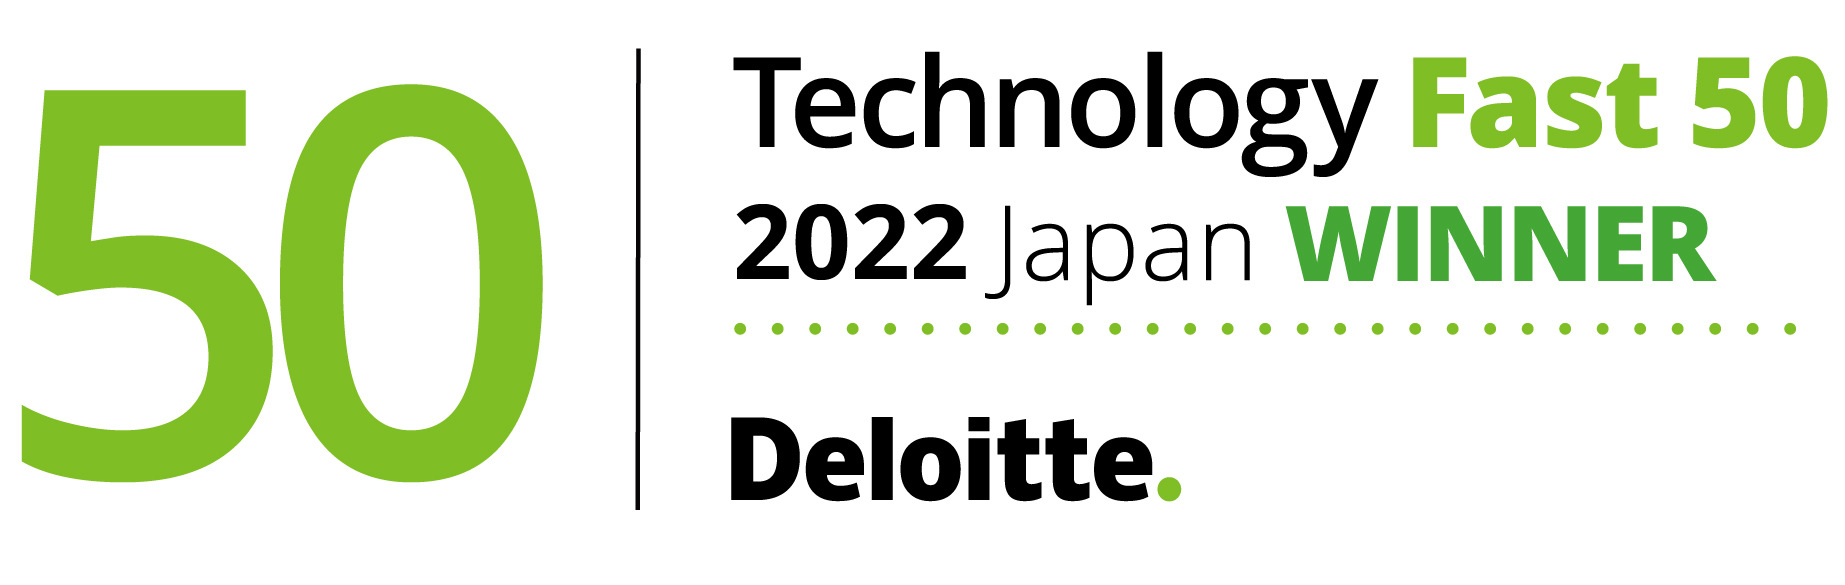 Technology Fast 50 2022 Japan